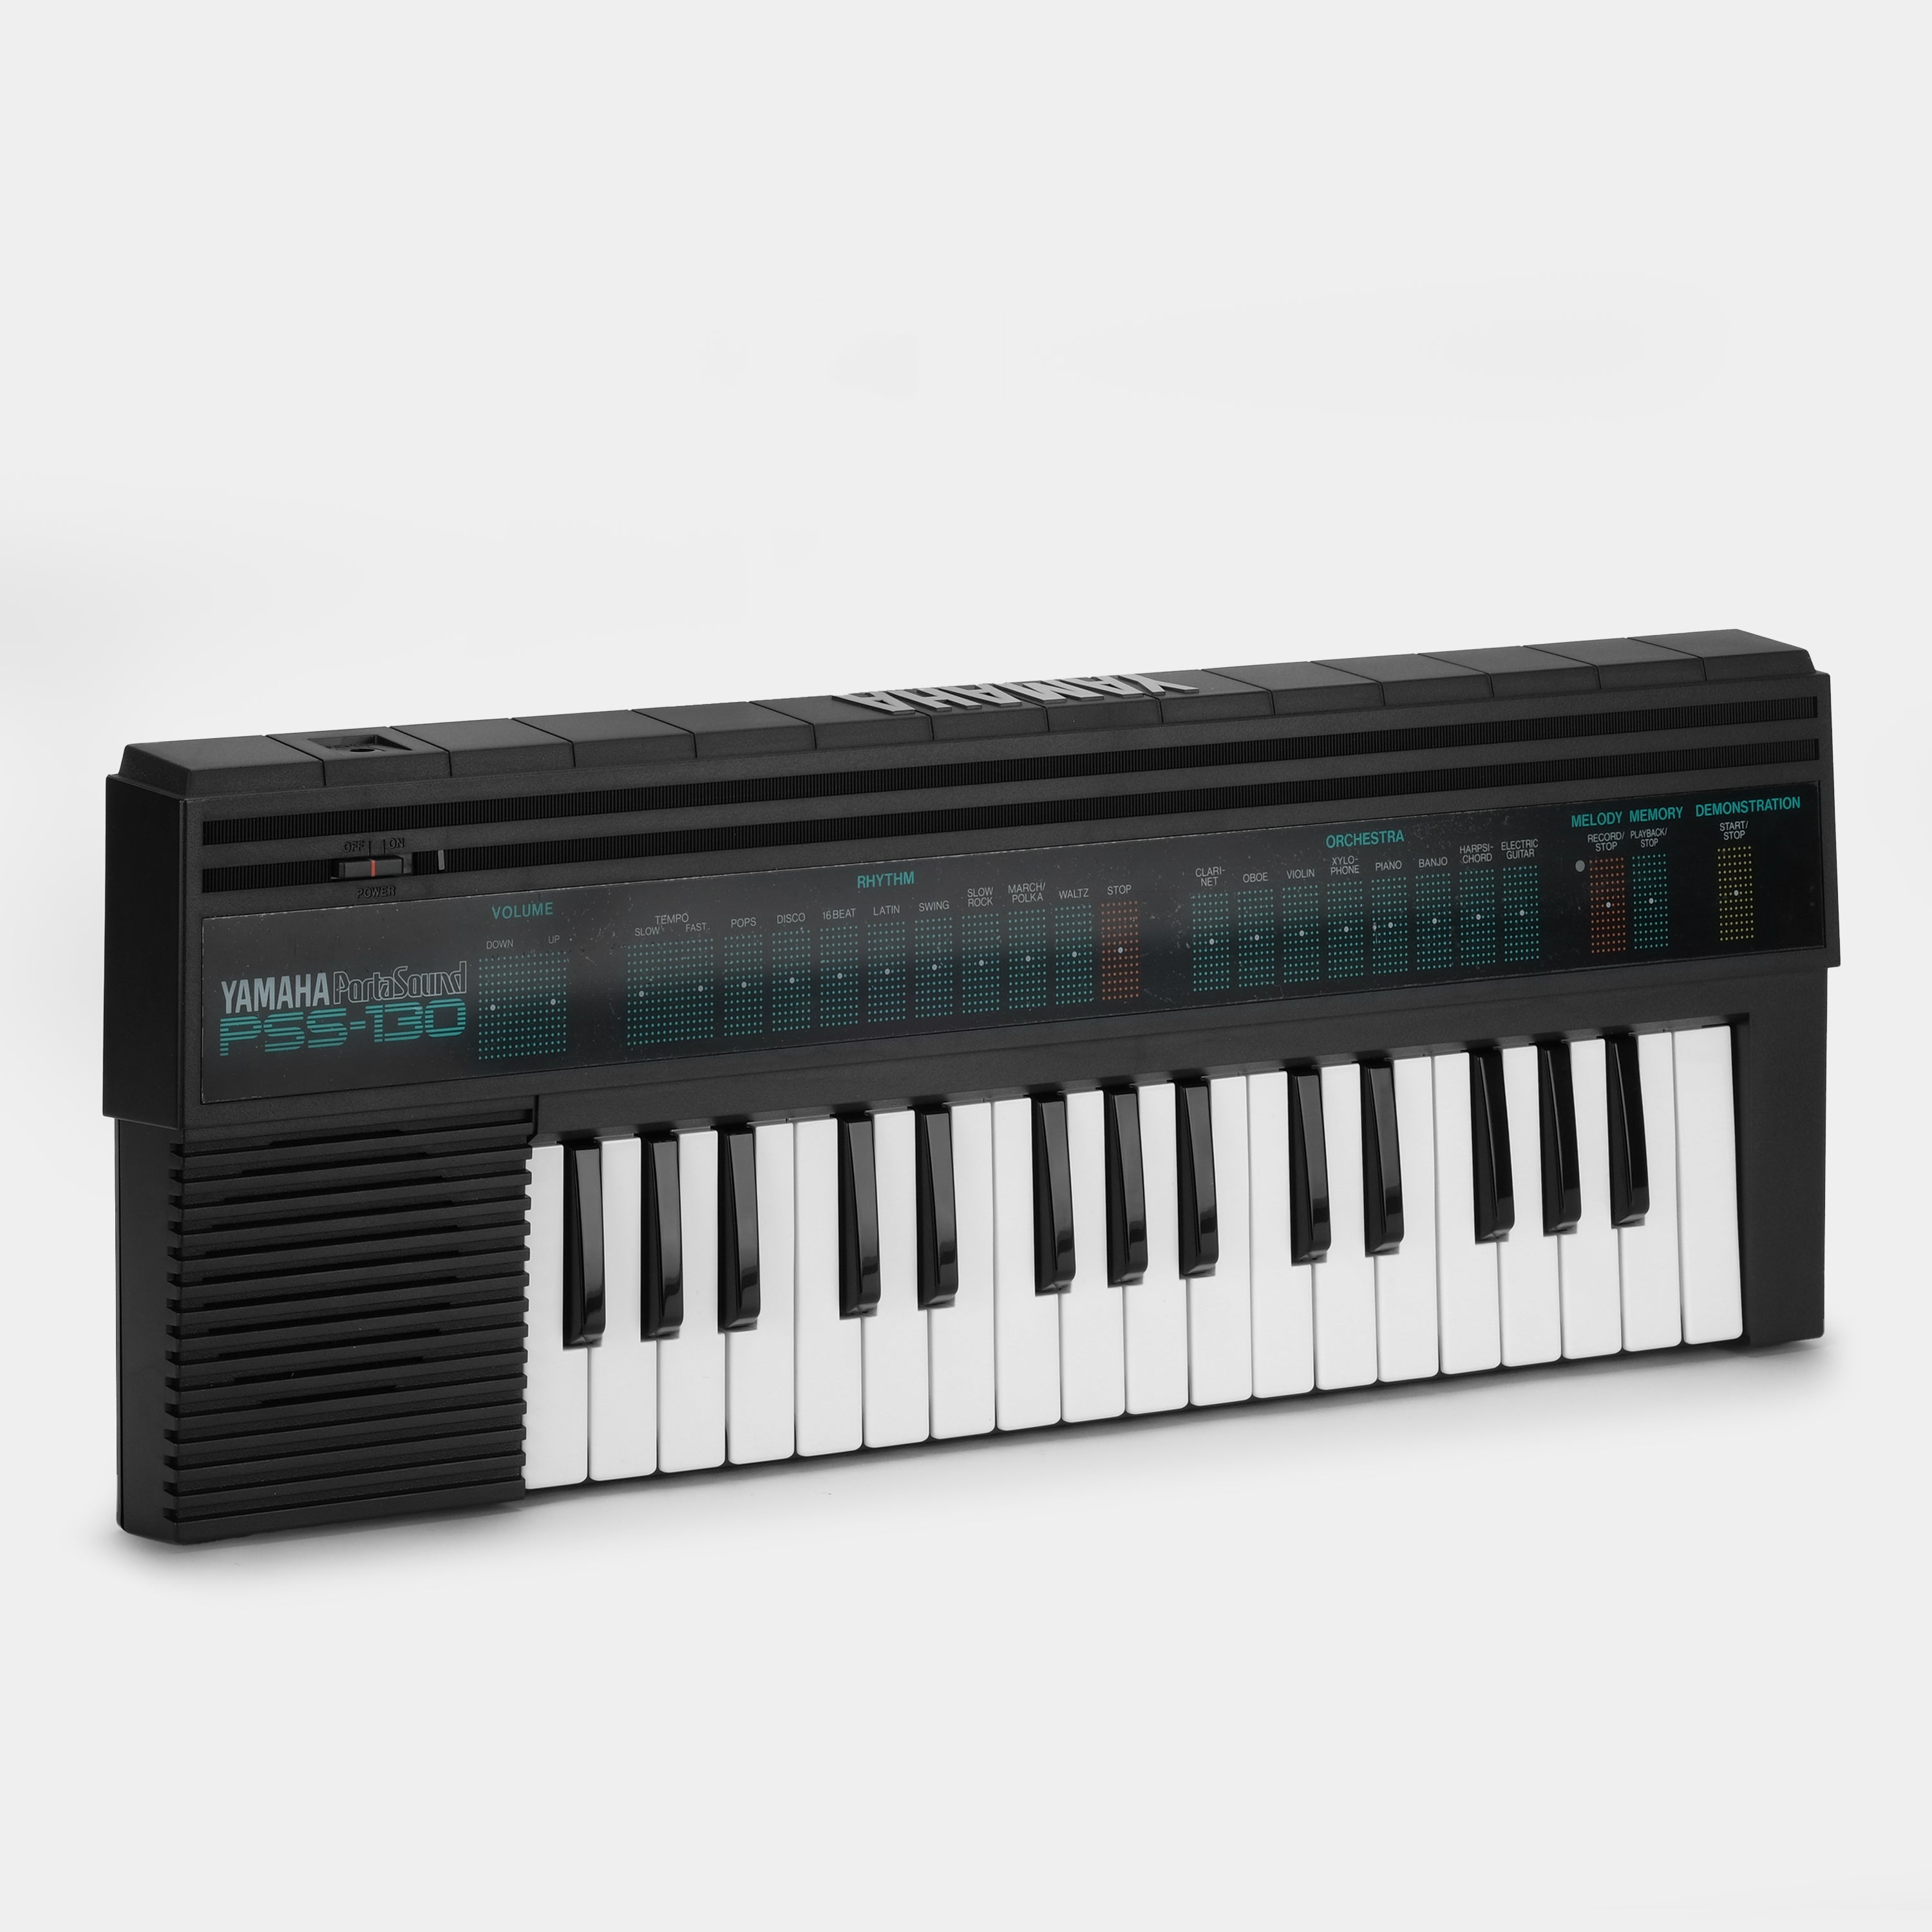 Yamaha PortaSound PSS-130 Synthesizer Keyboard